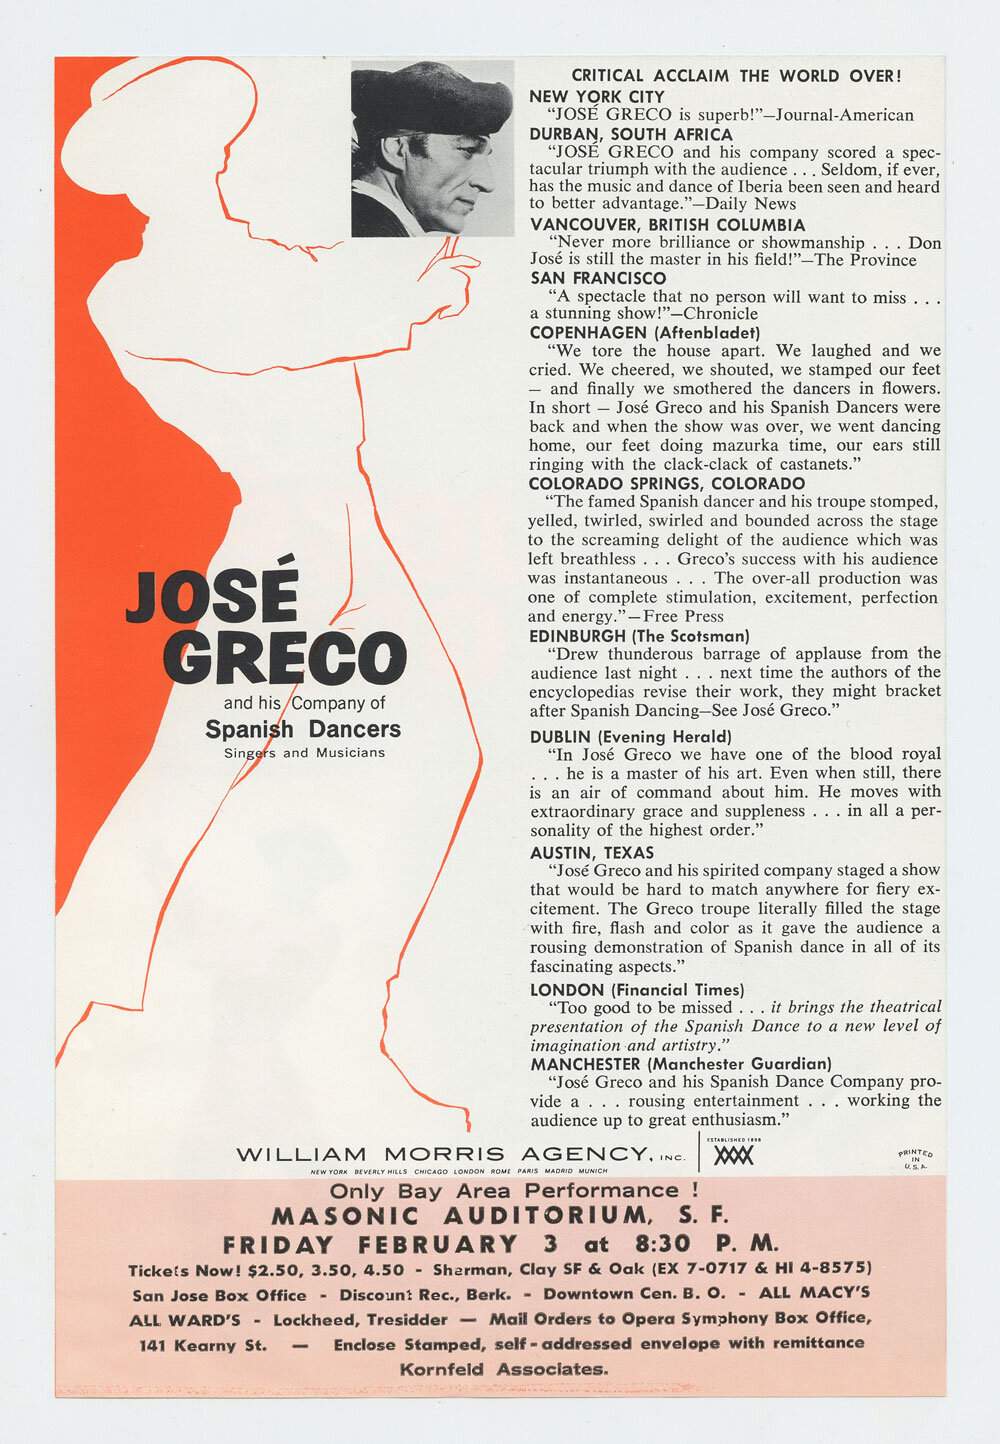 Jose Greco Handbill 1961 Feb 3 Masonic Auditorium San Francisco